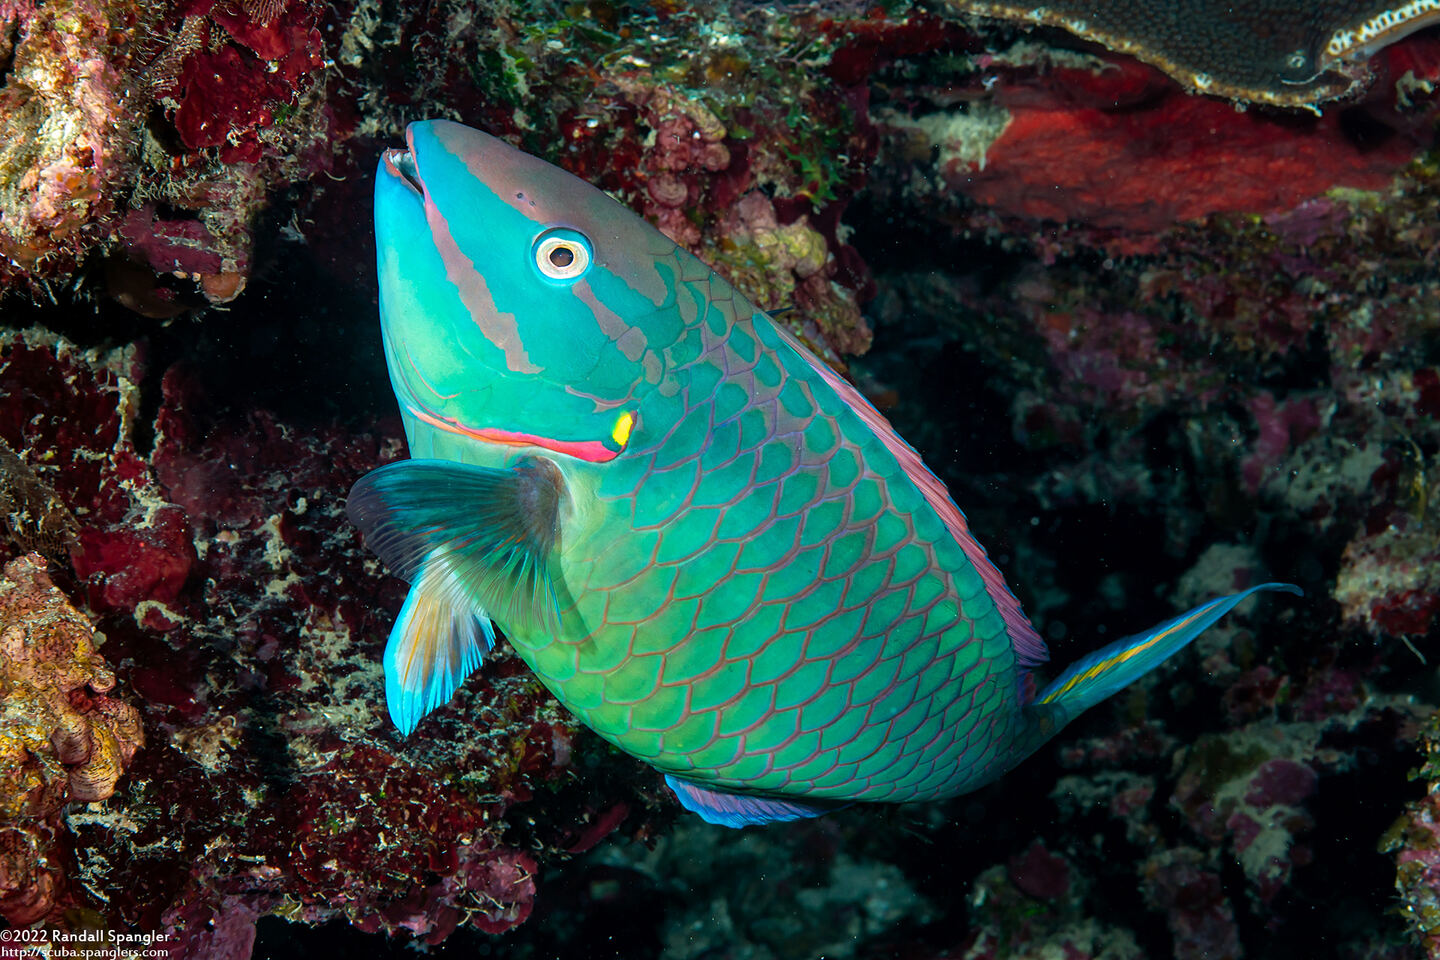 Sparisoma viride (Stoplight Parrotfish)